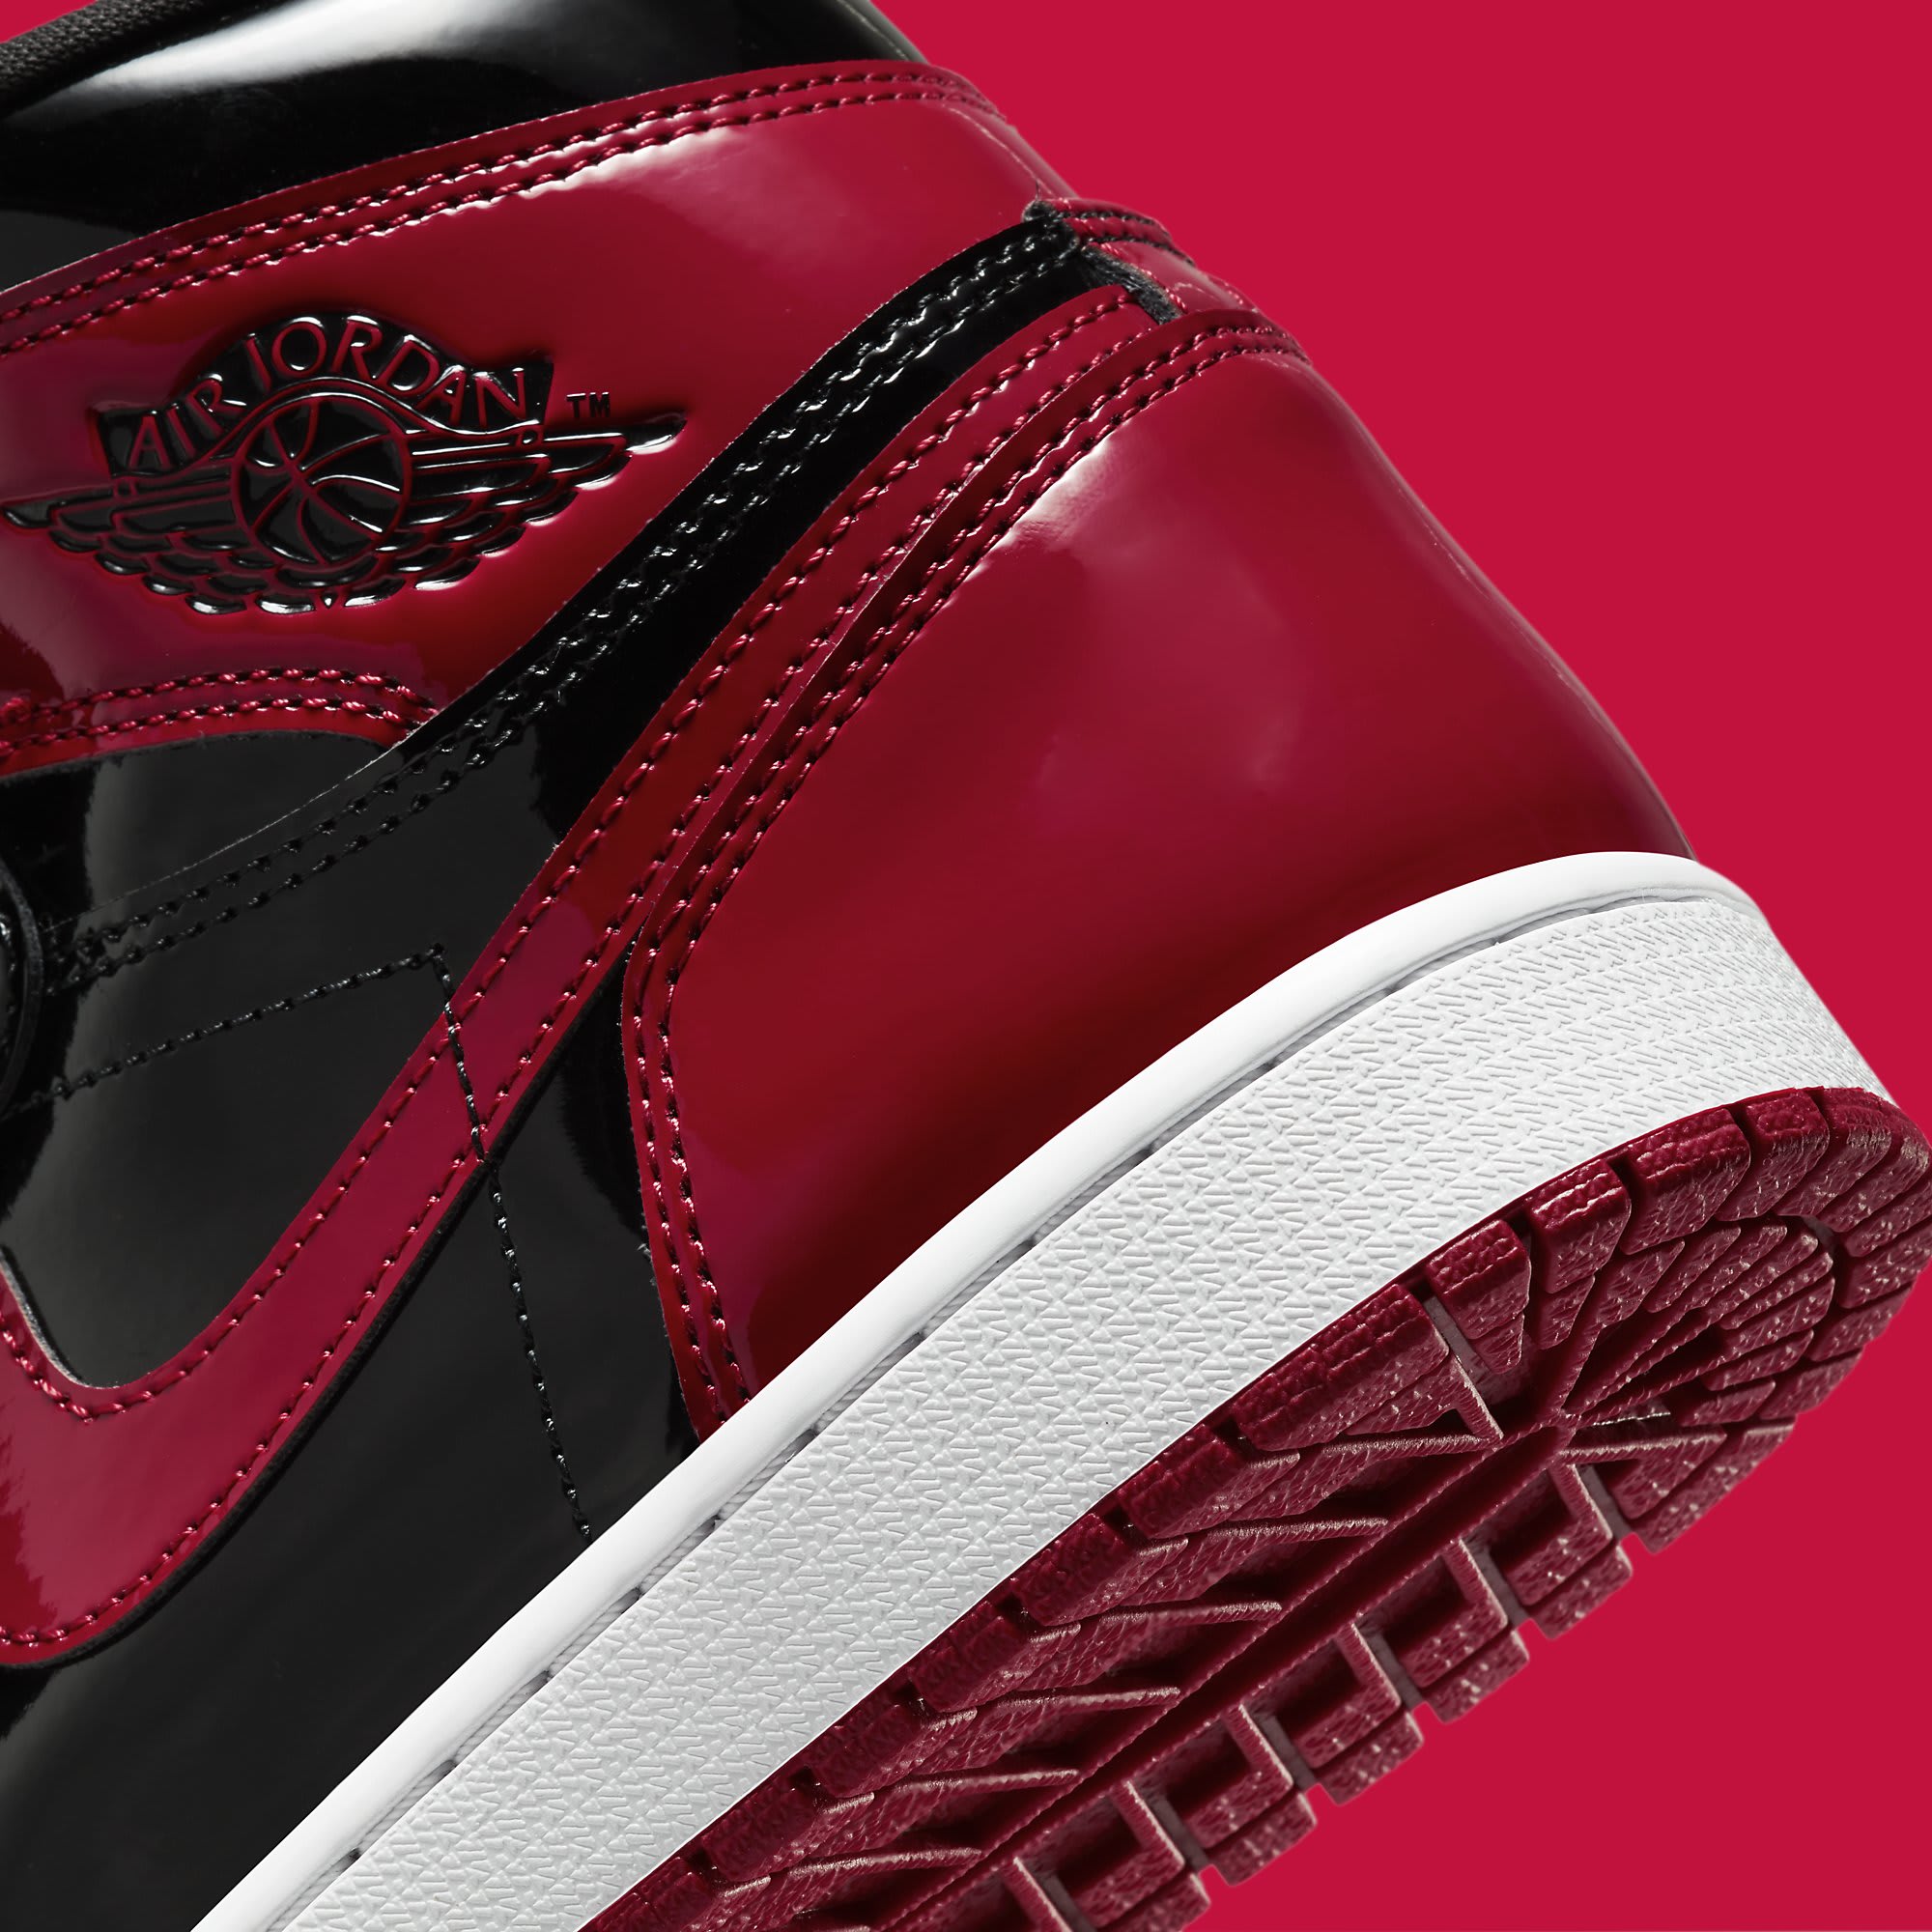 Air Jordan 1 I Bred Patent Leather Release Date 555088-063 Heel Detail